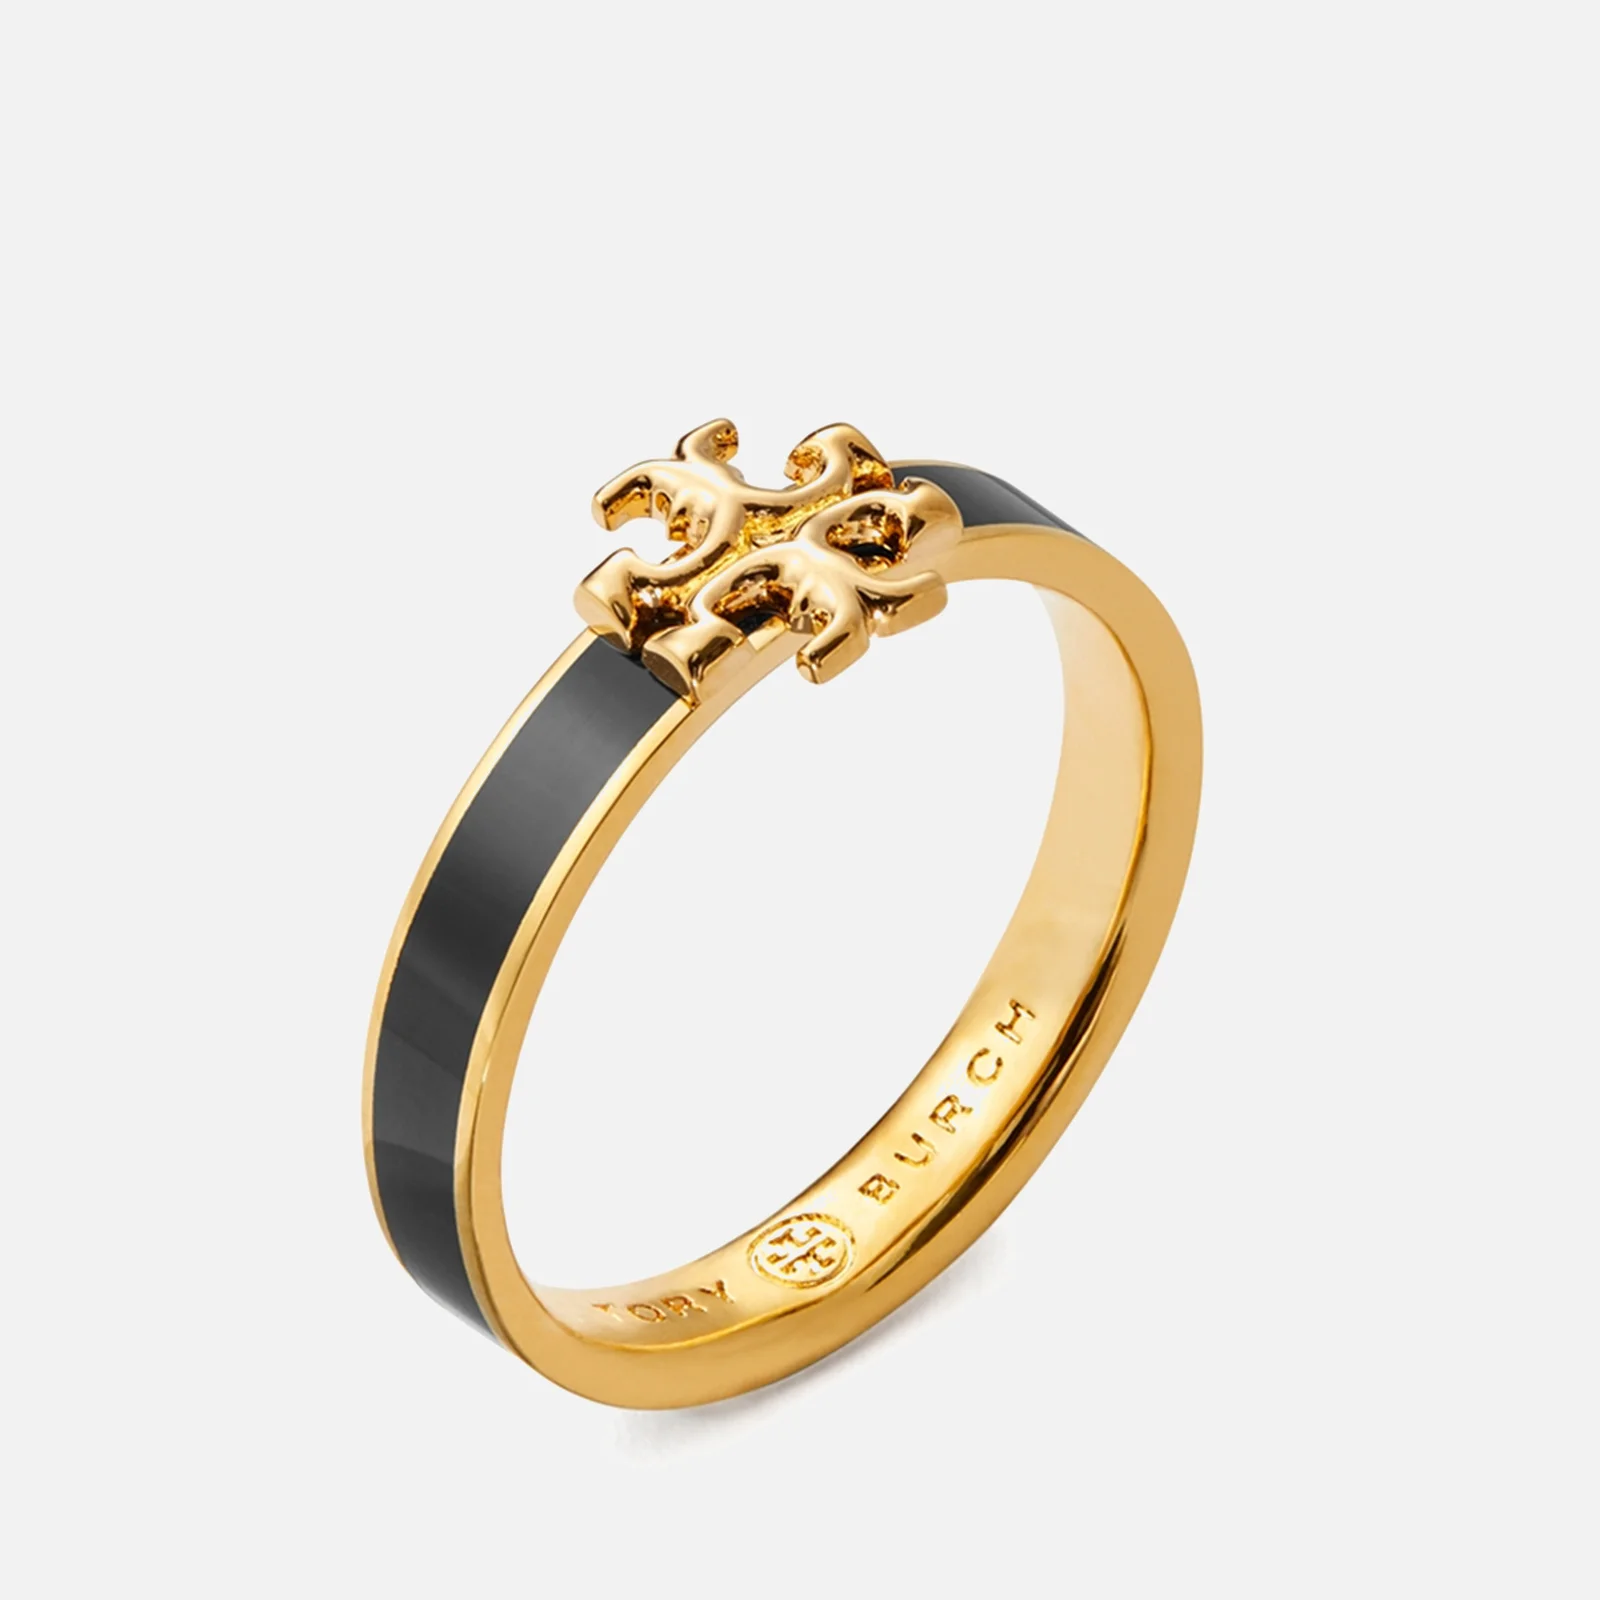 Tory Burch Kira Enamel and Gold-Tone Ring Image 1